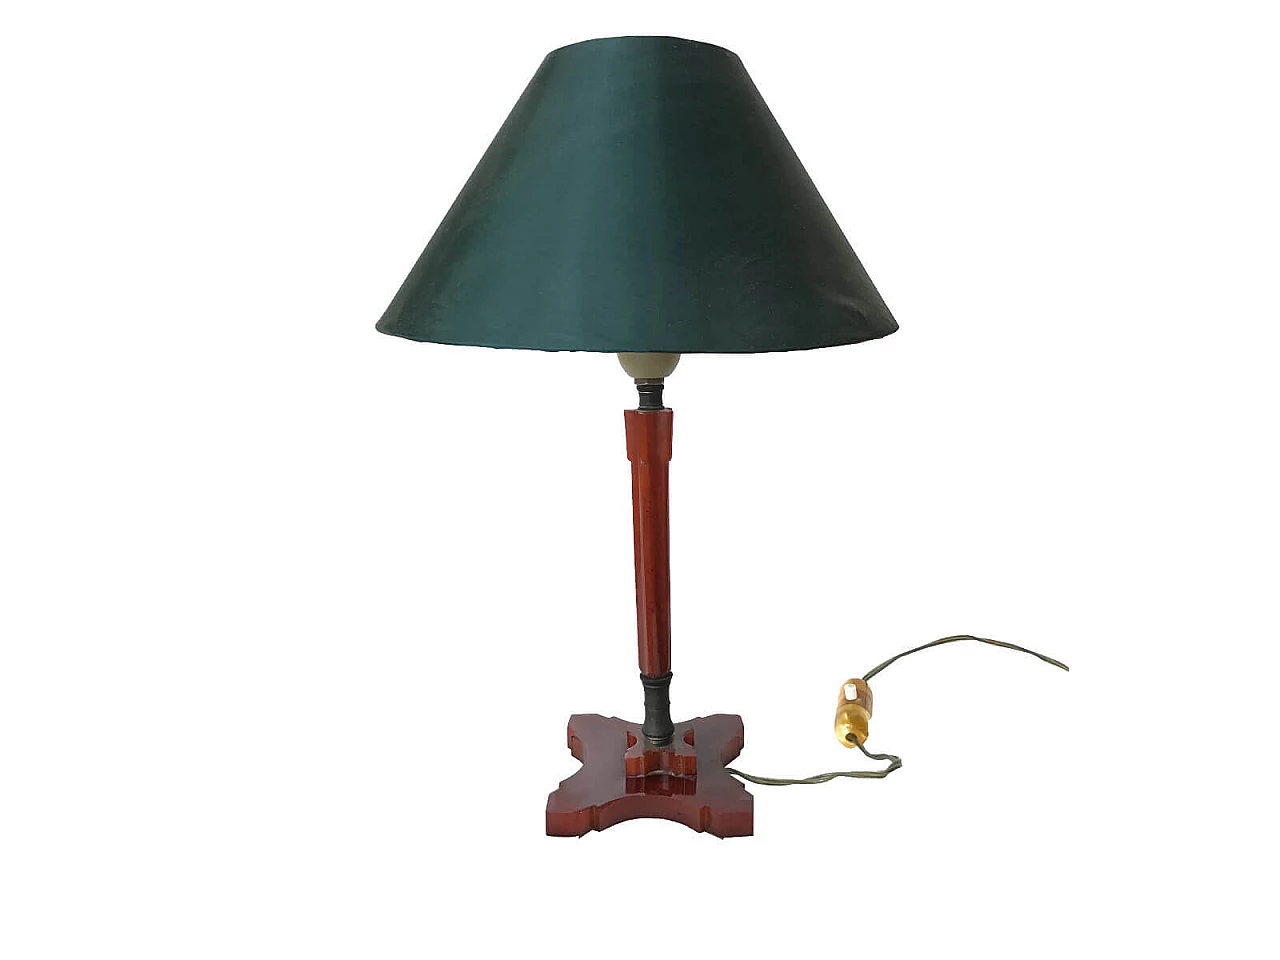 Bakelite Déco style table lamp, England, 30s 1